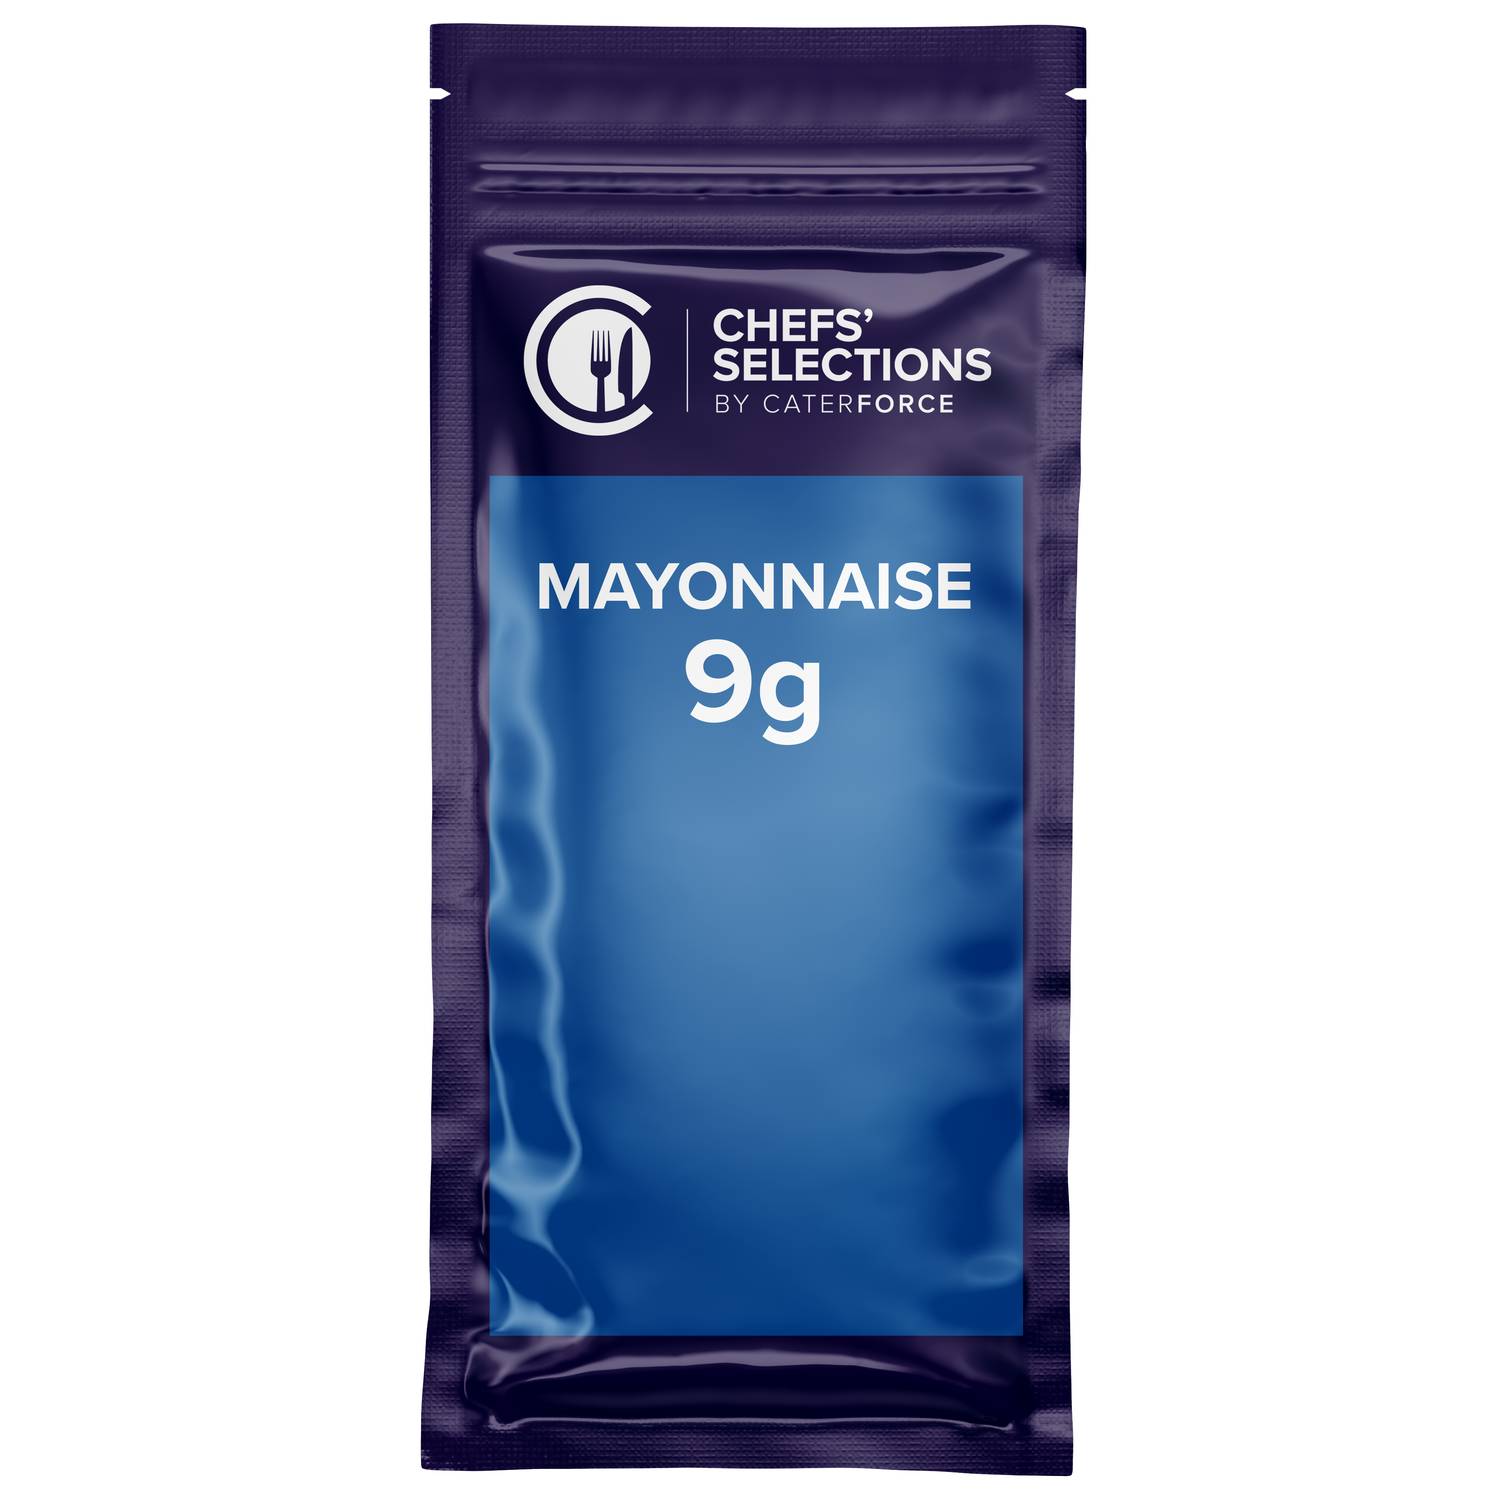 Chefs’ Selections Mayonnaise Sachet (200 x 9g)